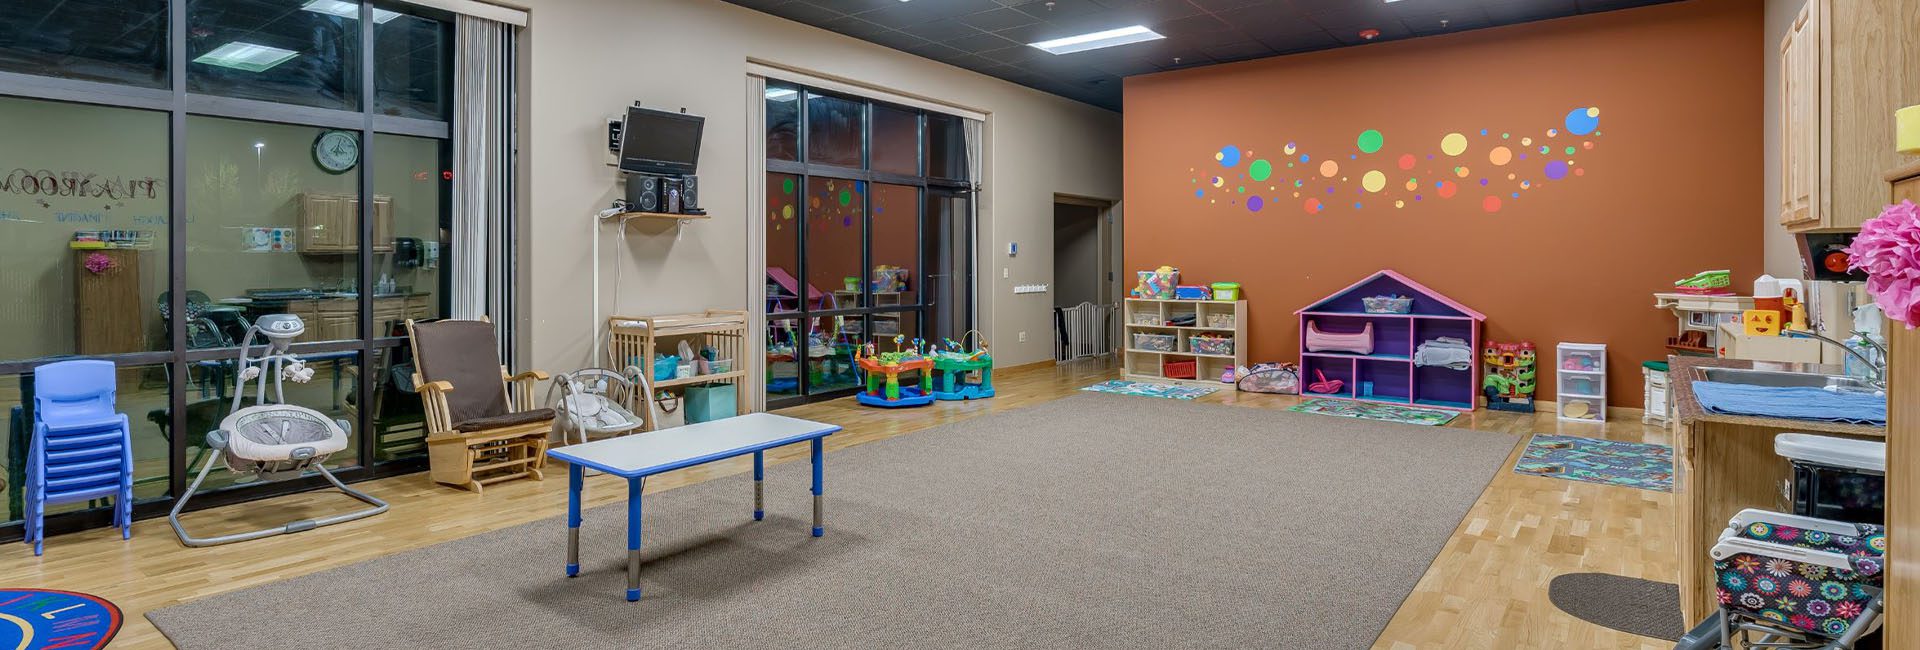 dedicated childcare room